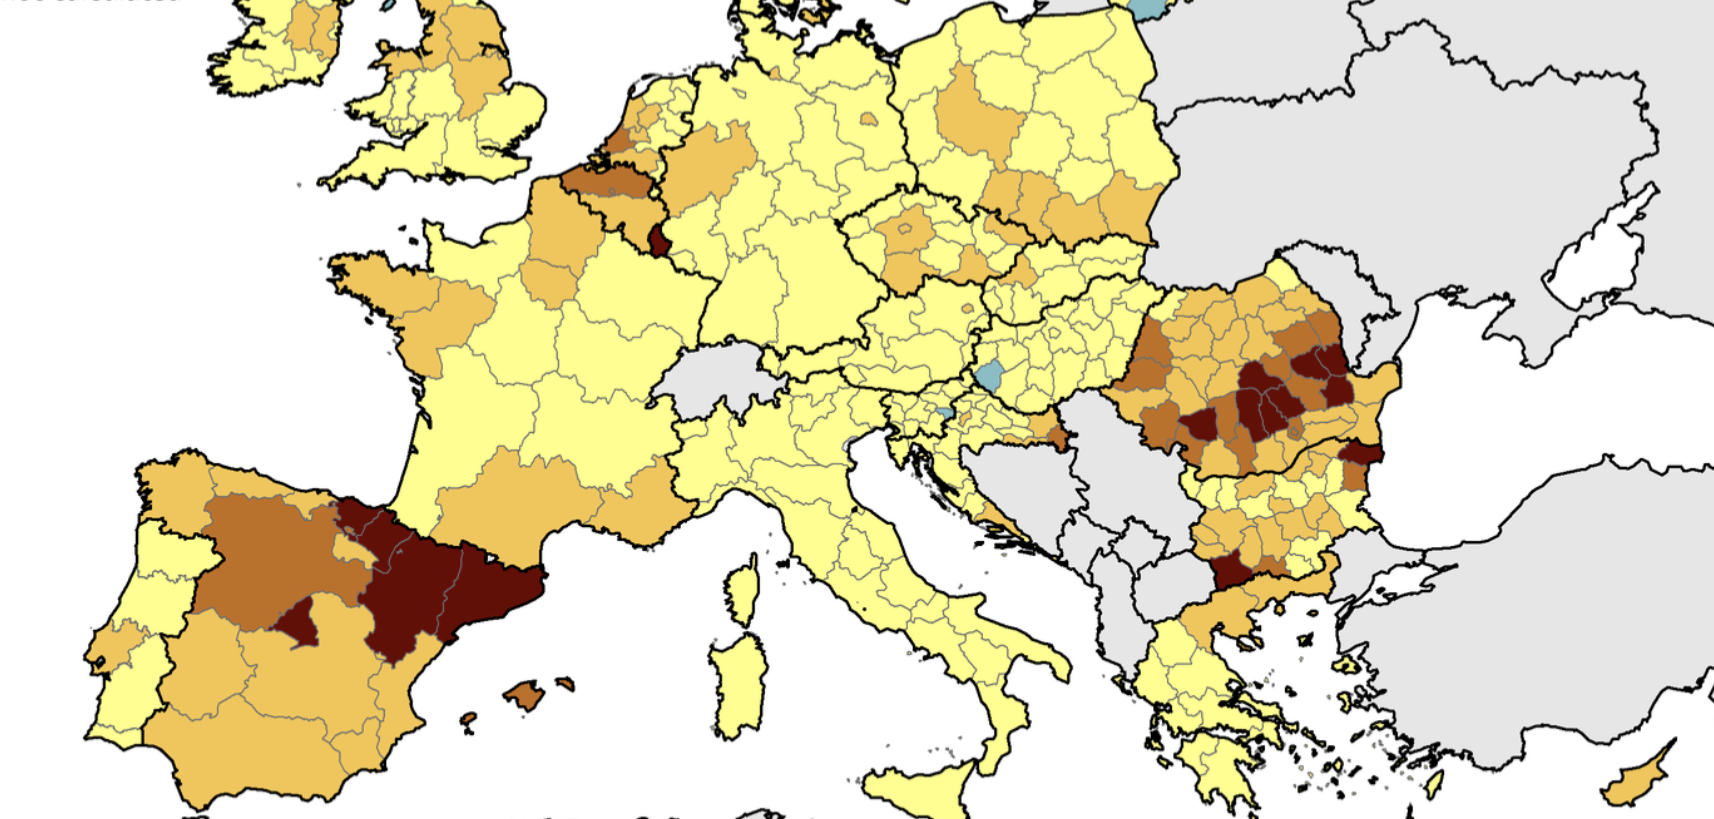 Madrid, peor que cualquier país europeo: Ayuso admite datos alarmantes por coronavirus. ECDC